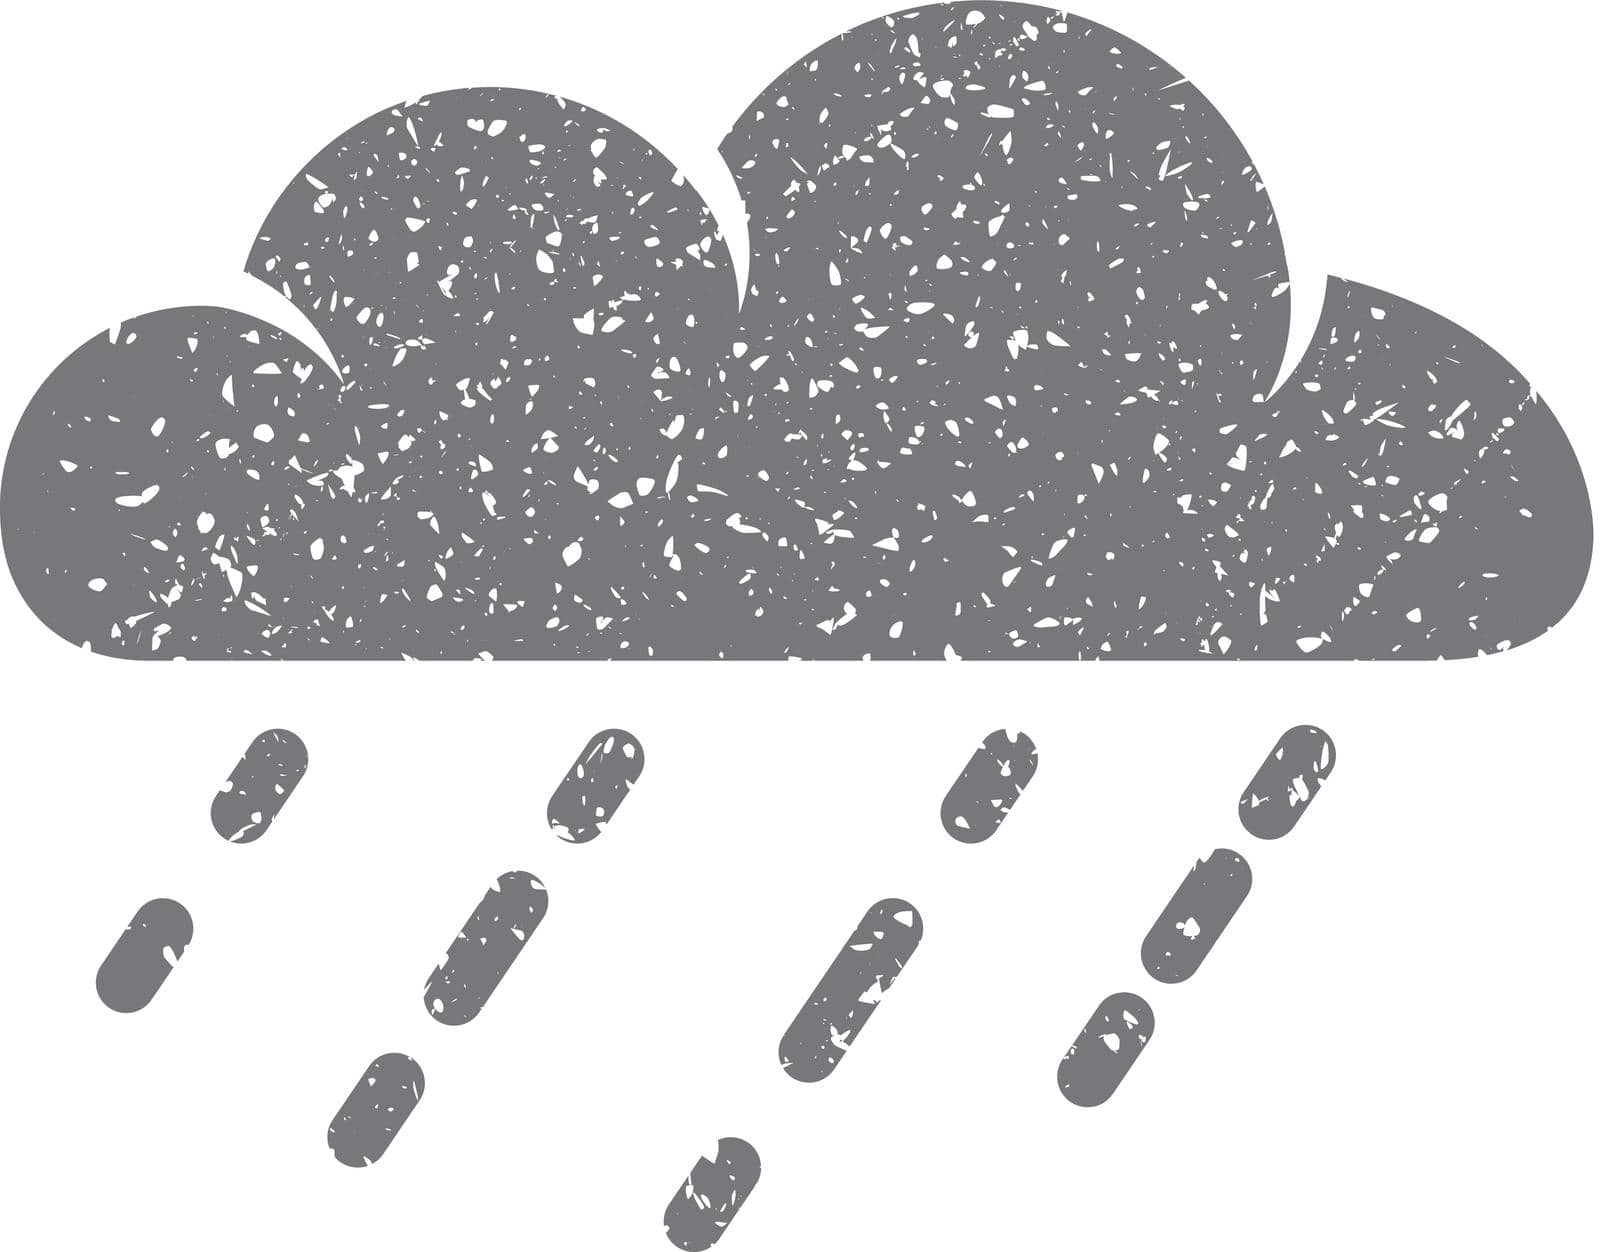 Rainy icon in grunge texture. Vintage style vector illustration.